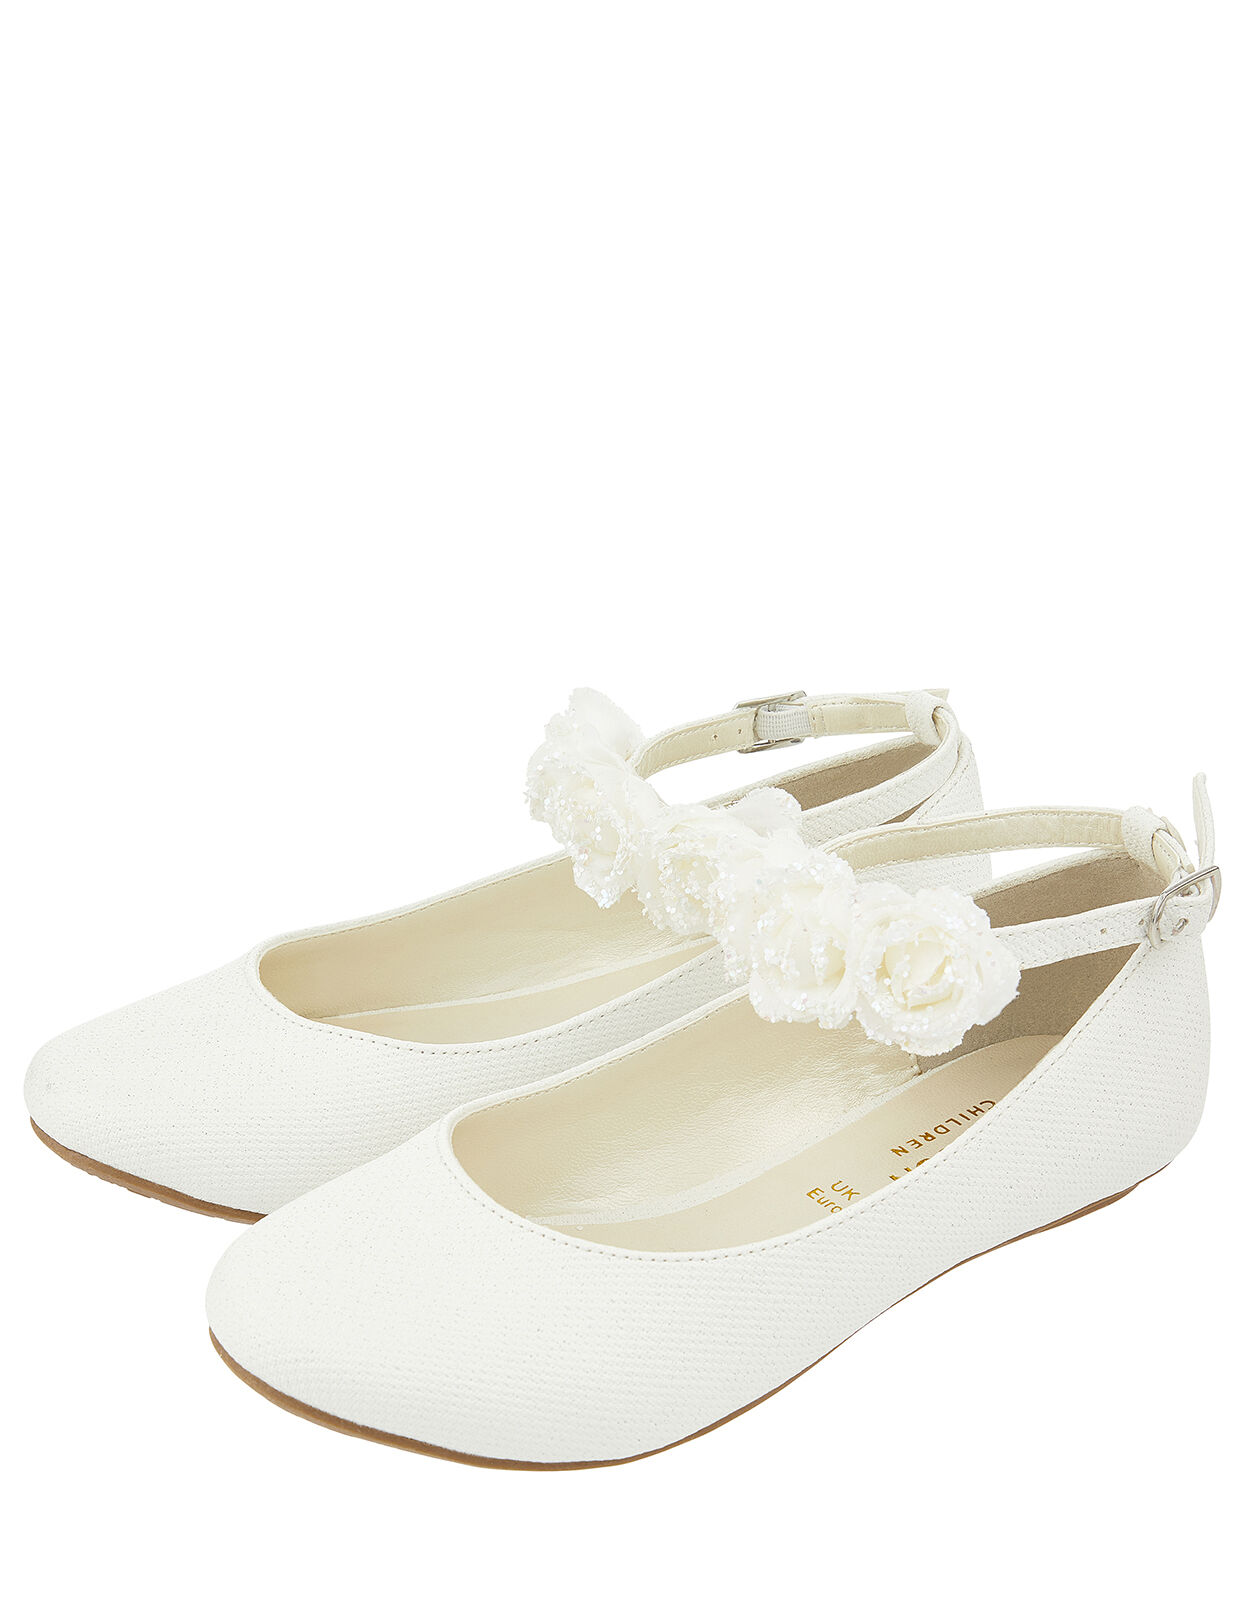 flower girl shoes ireland